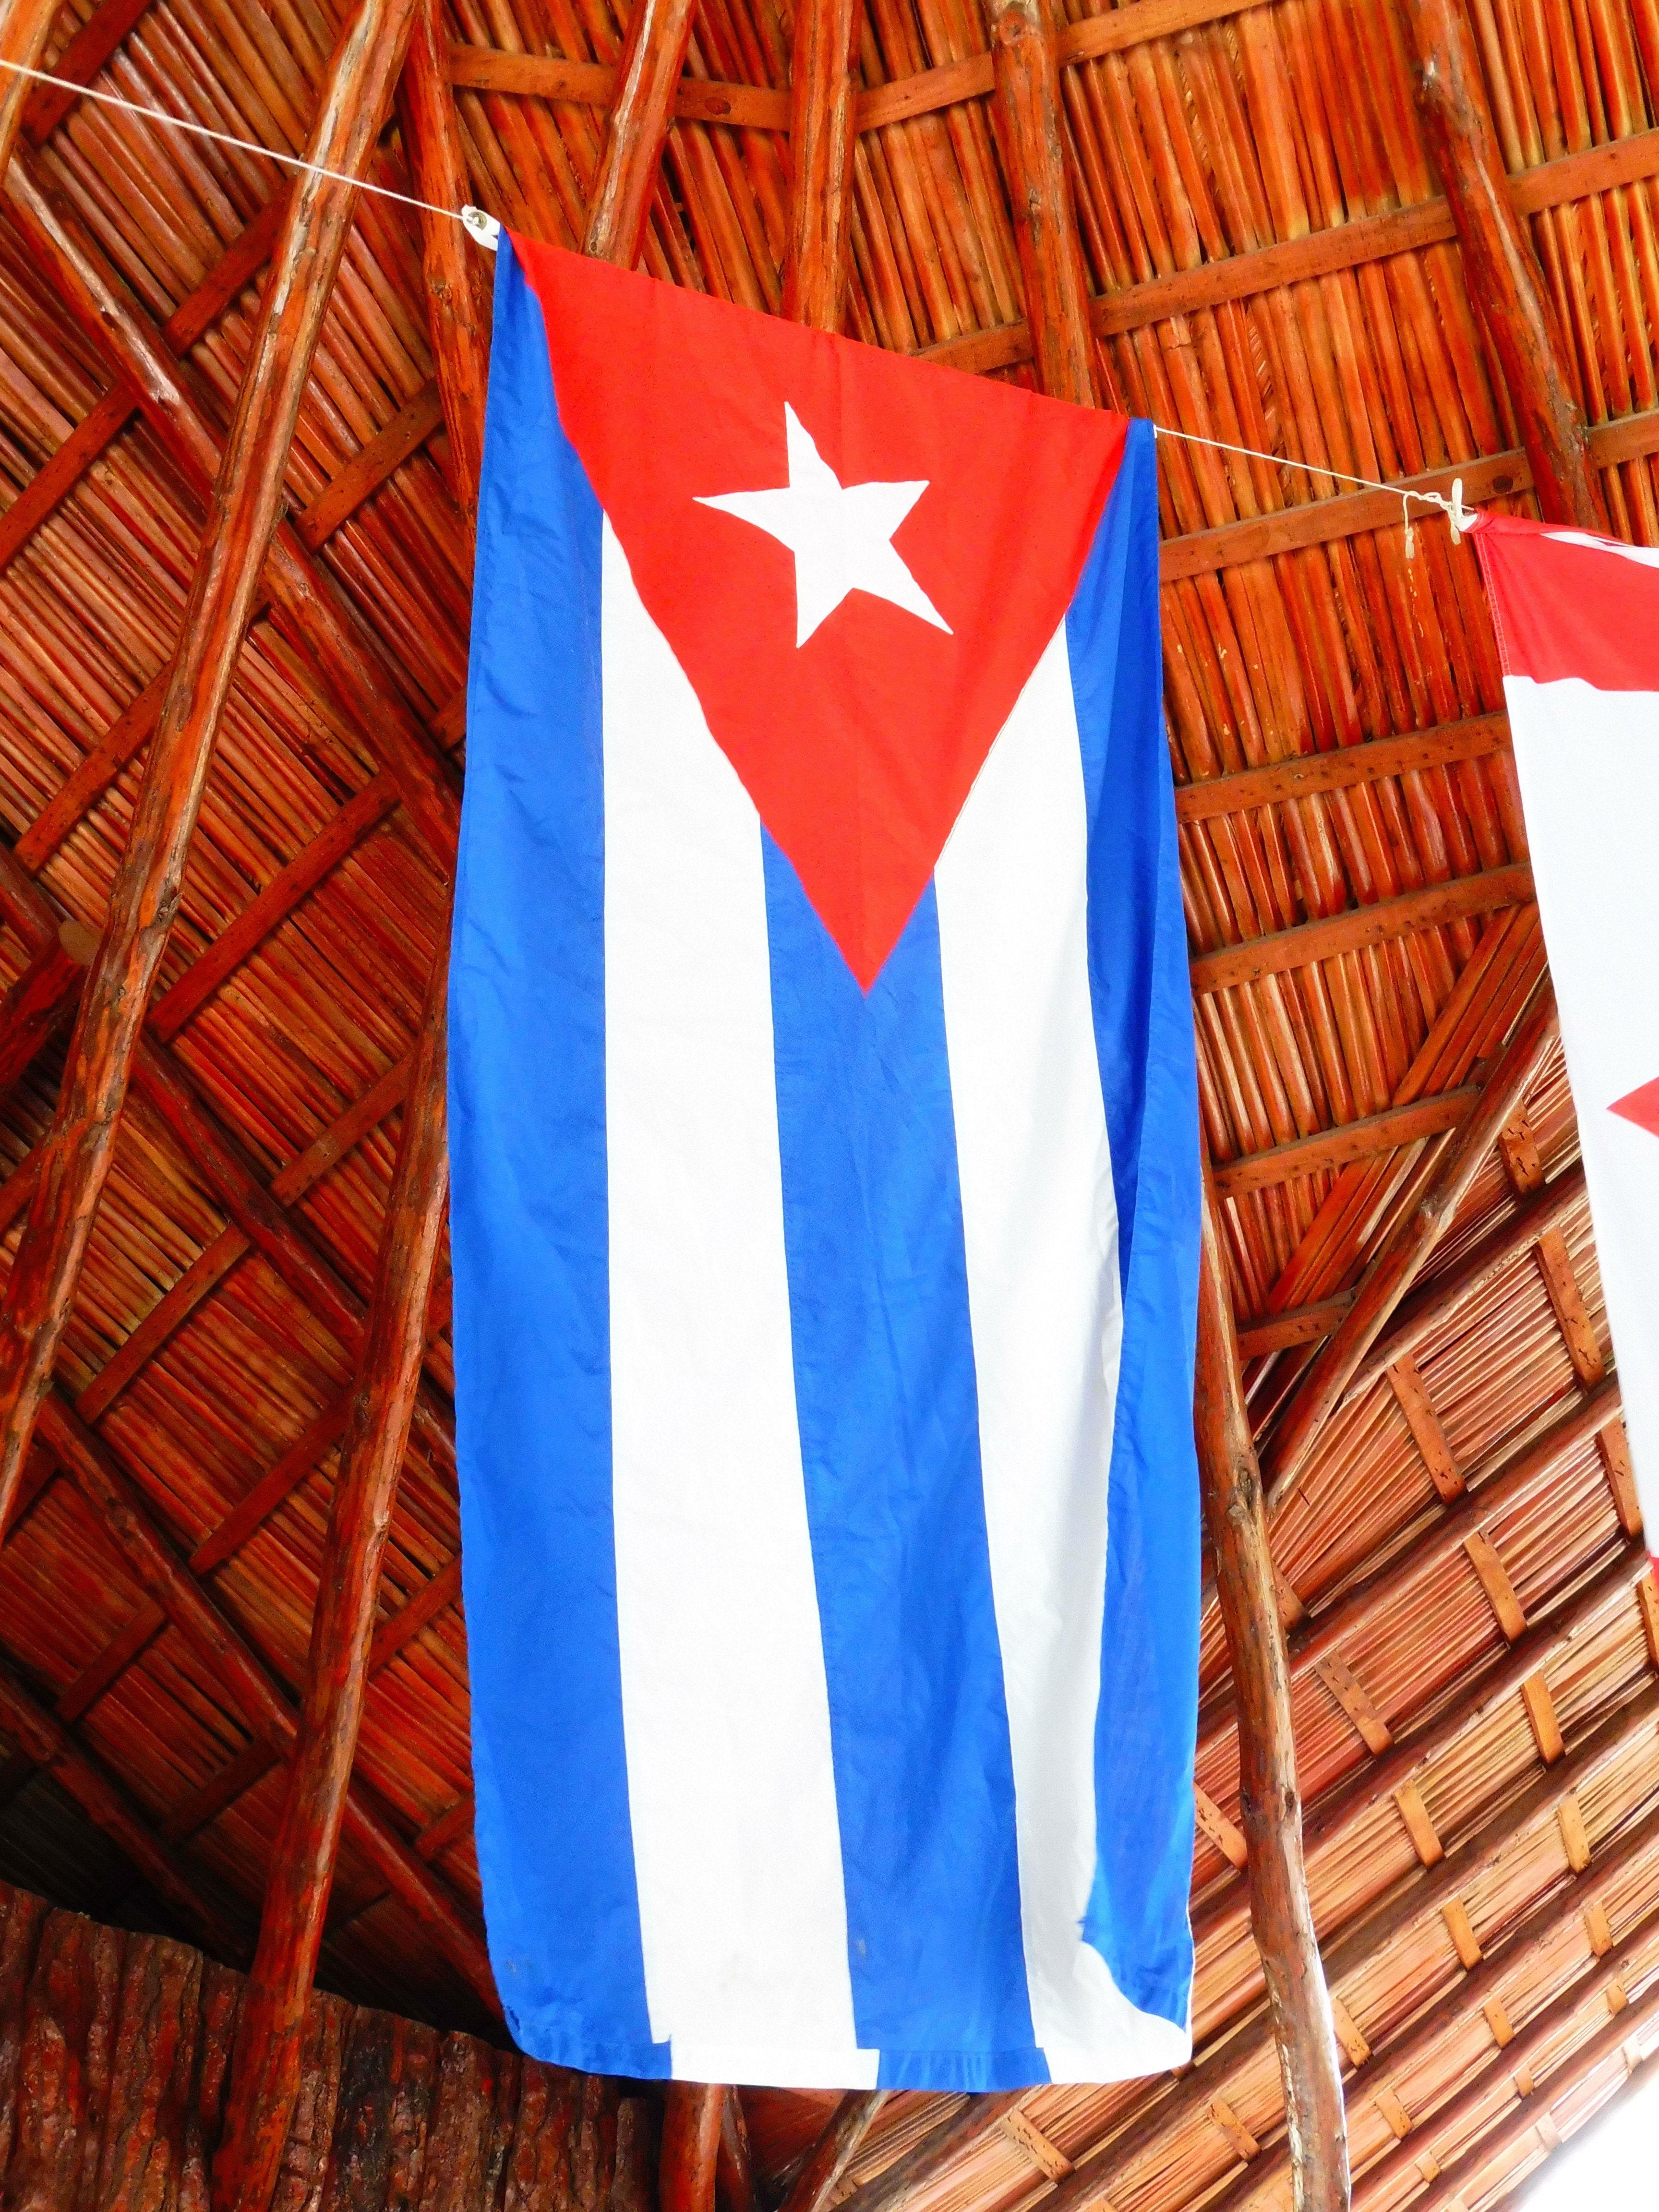 flag of cuba free image